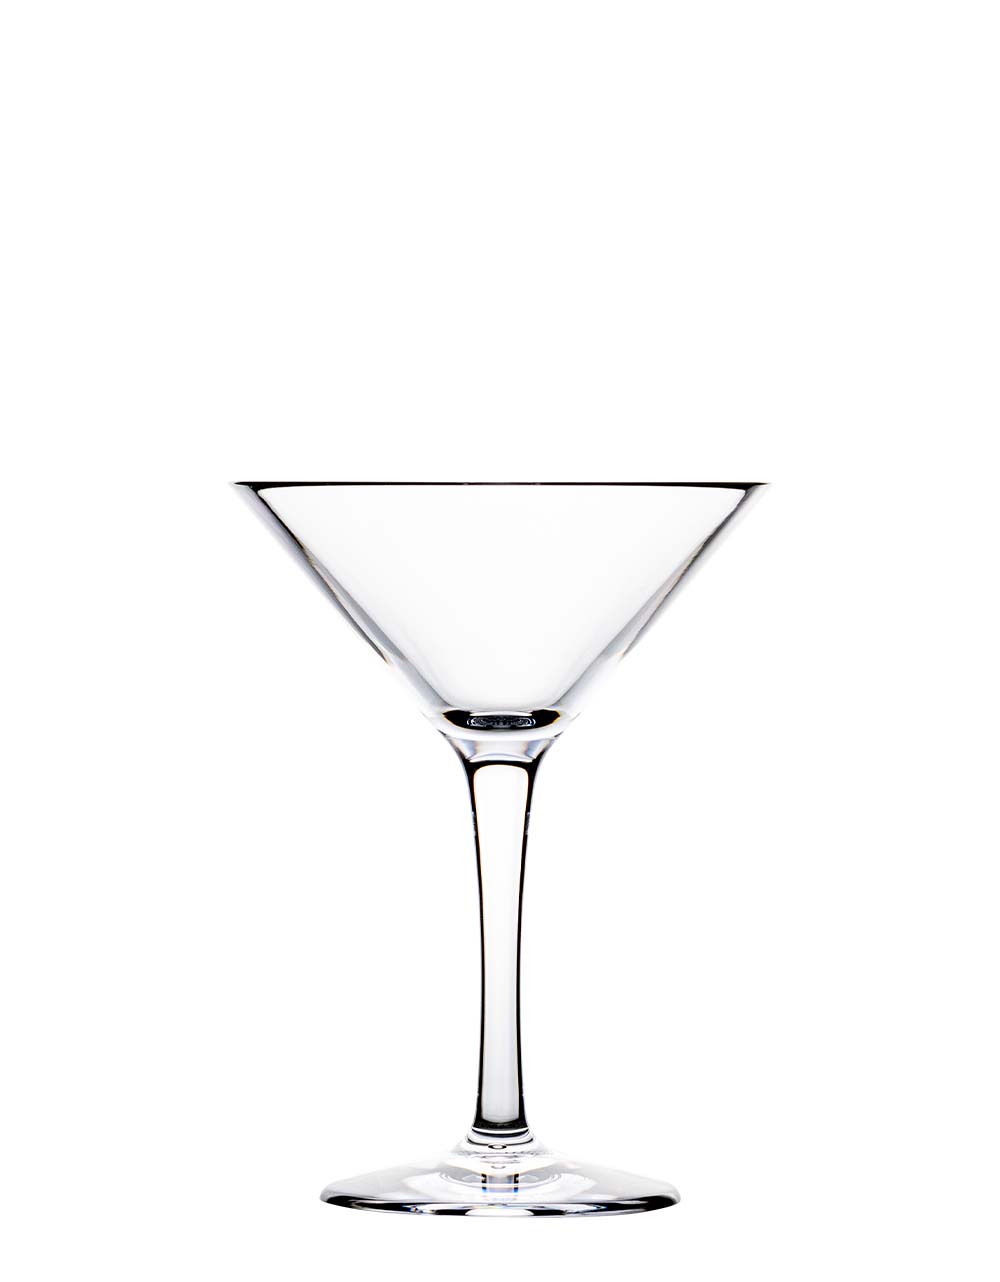 Revel 8 oz. Martini